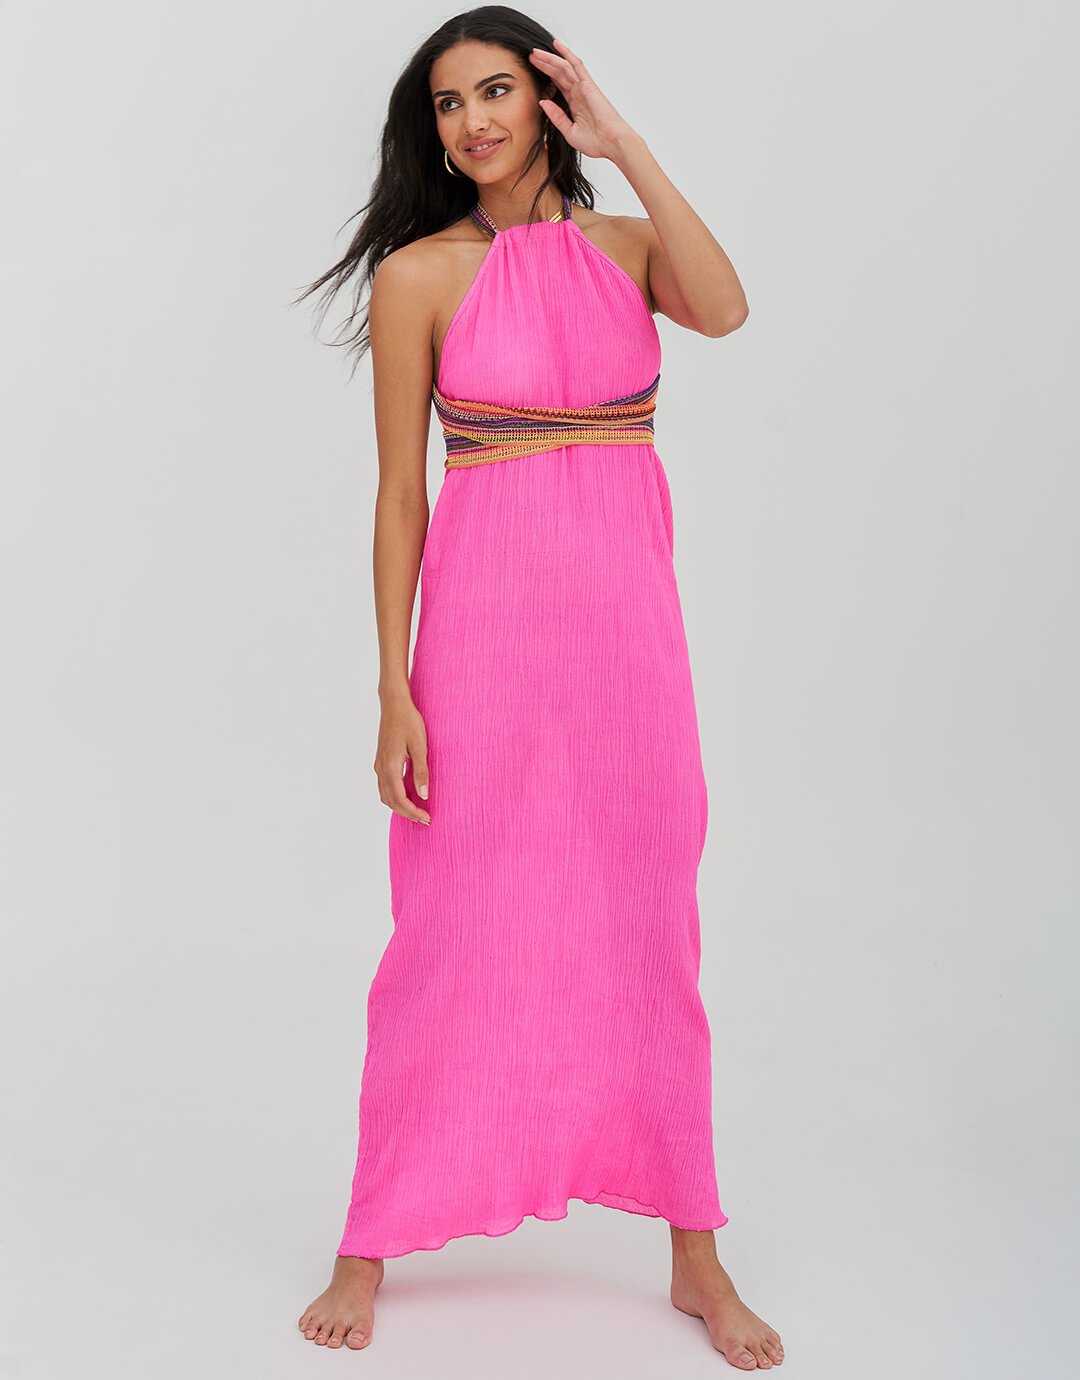 Crinkle Halter Dress - Hot Pink - Simply Beach UK